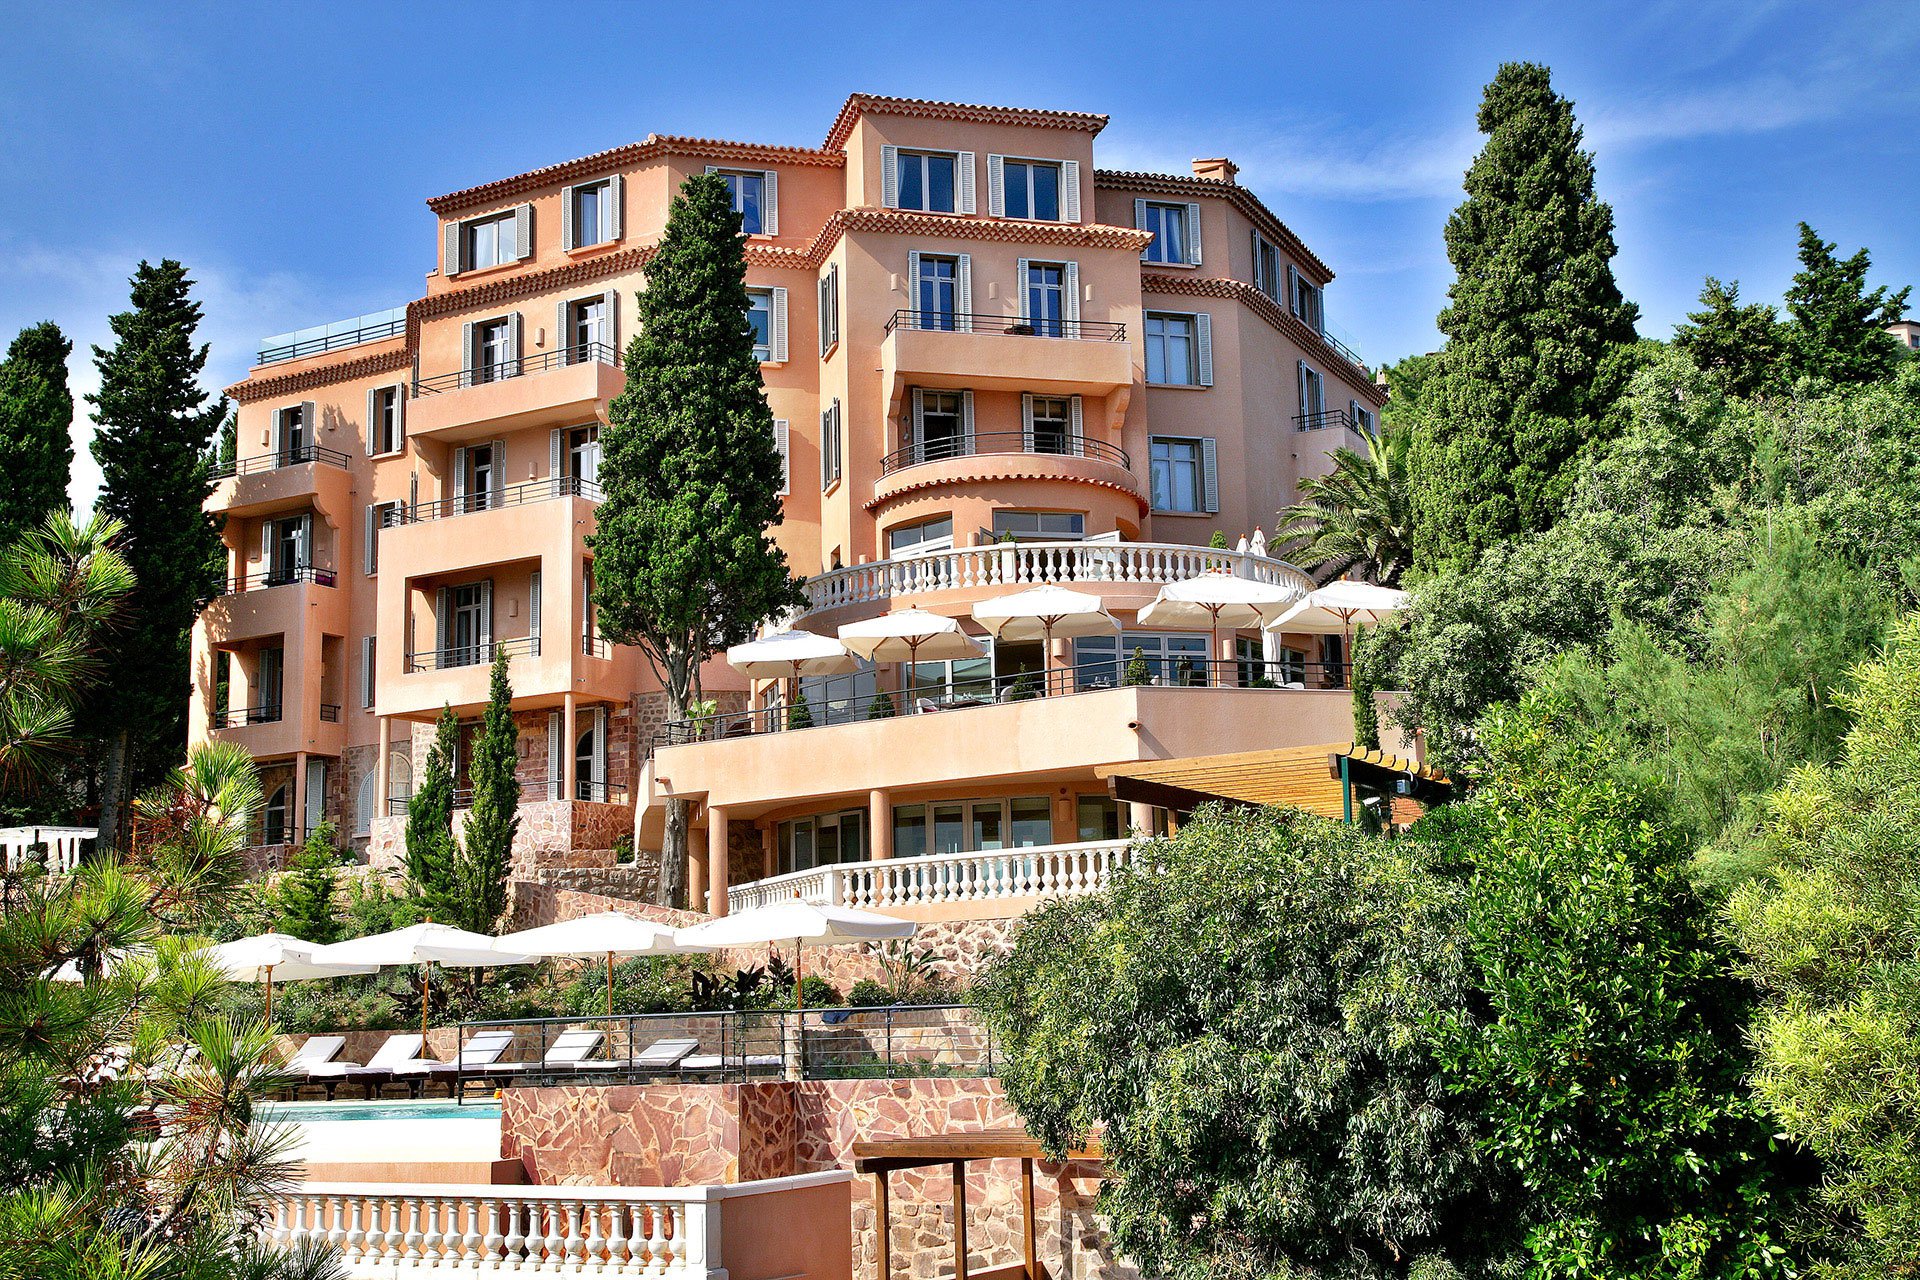 Tiara Yaktsa – Luxury hotel near Cannes